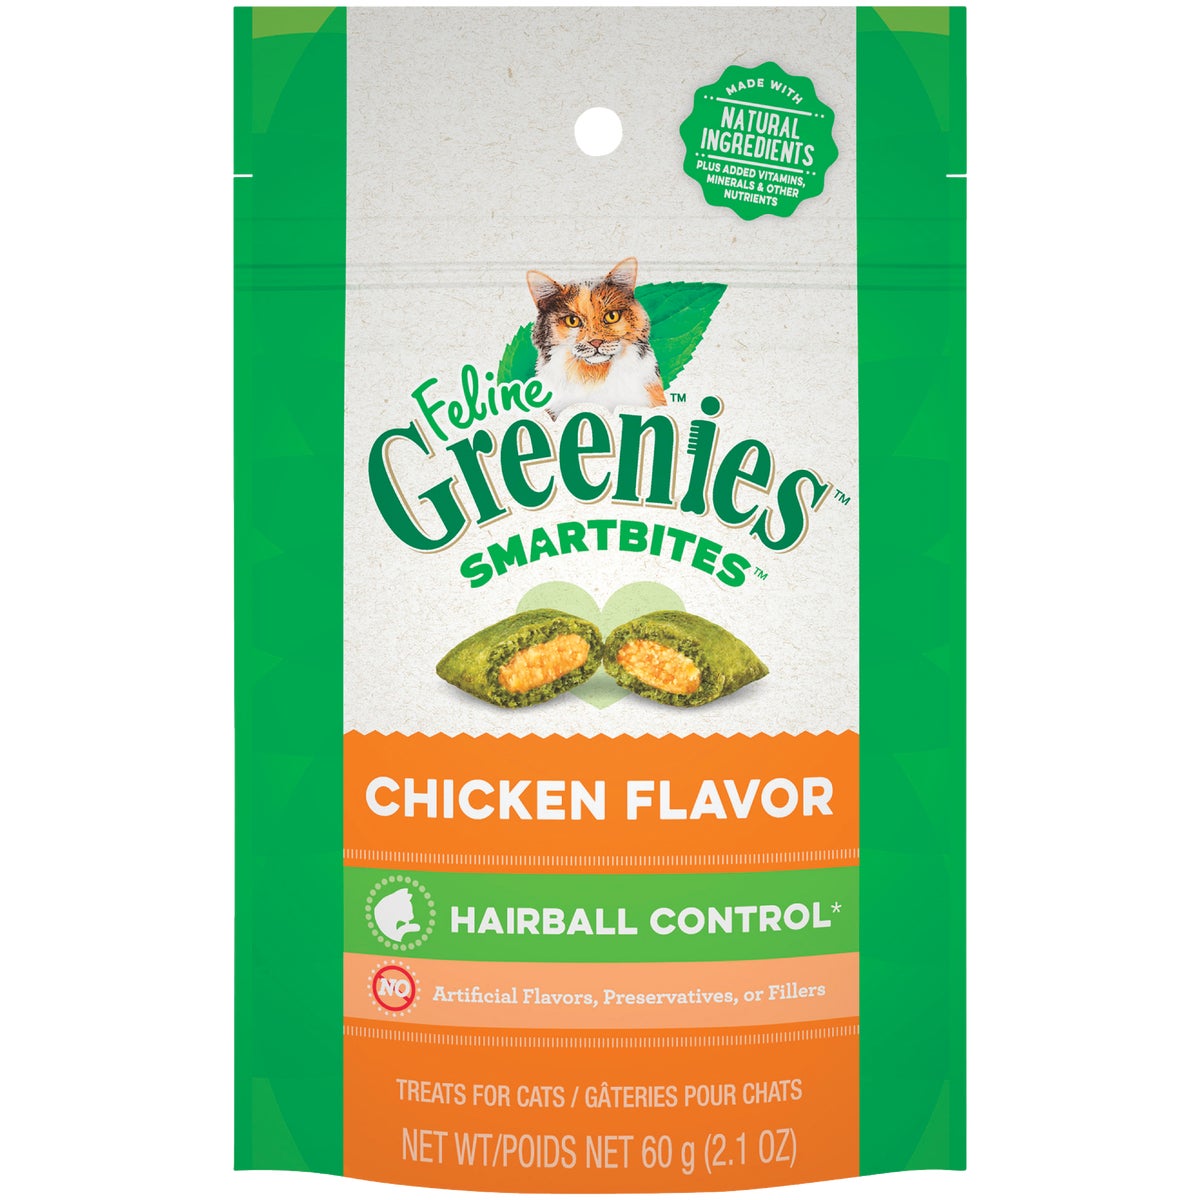 Greenies SmartBites Chicken 2.1 Oz. Hairball Control Cat Treats